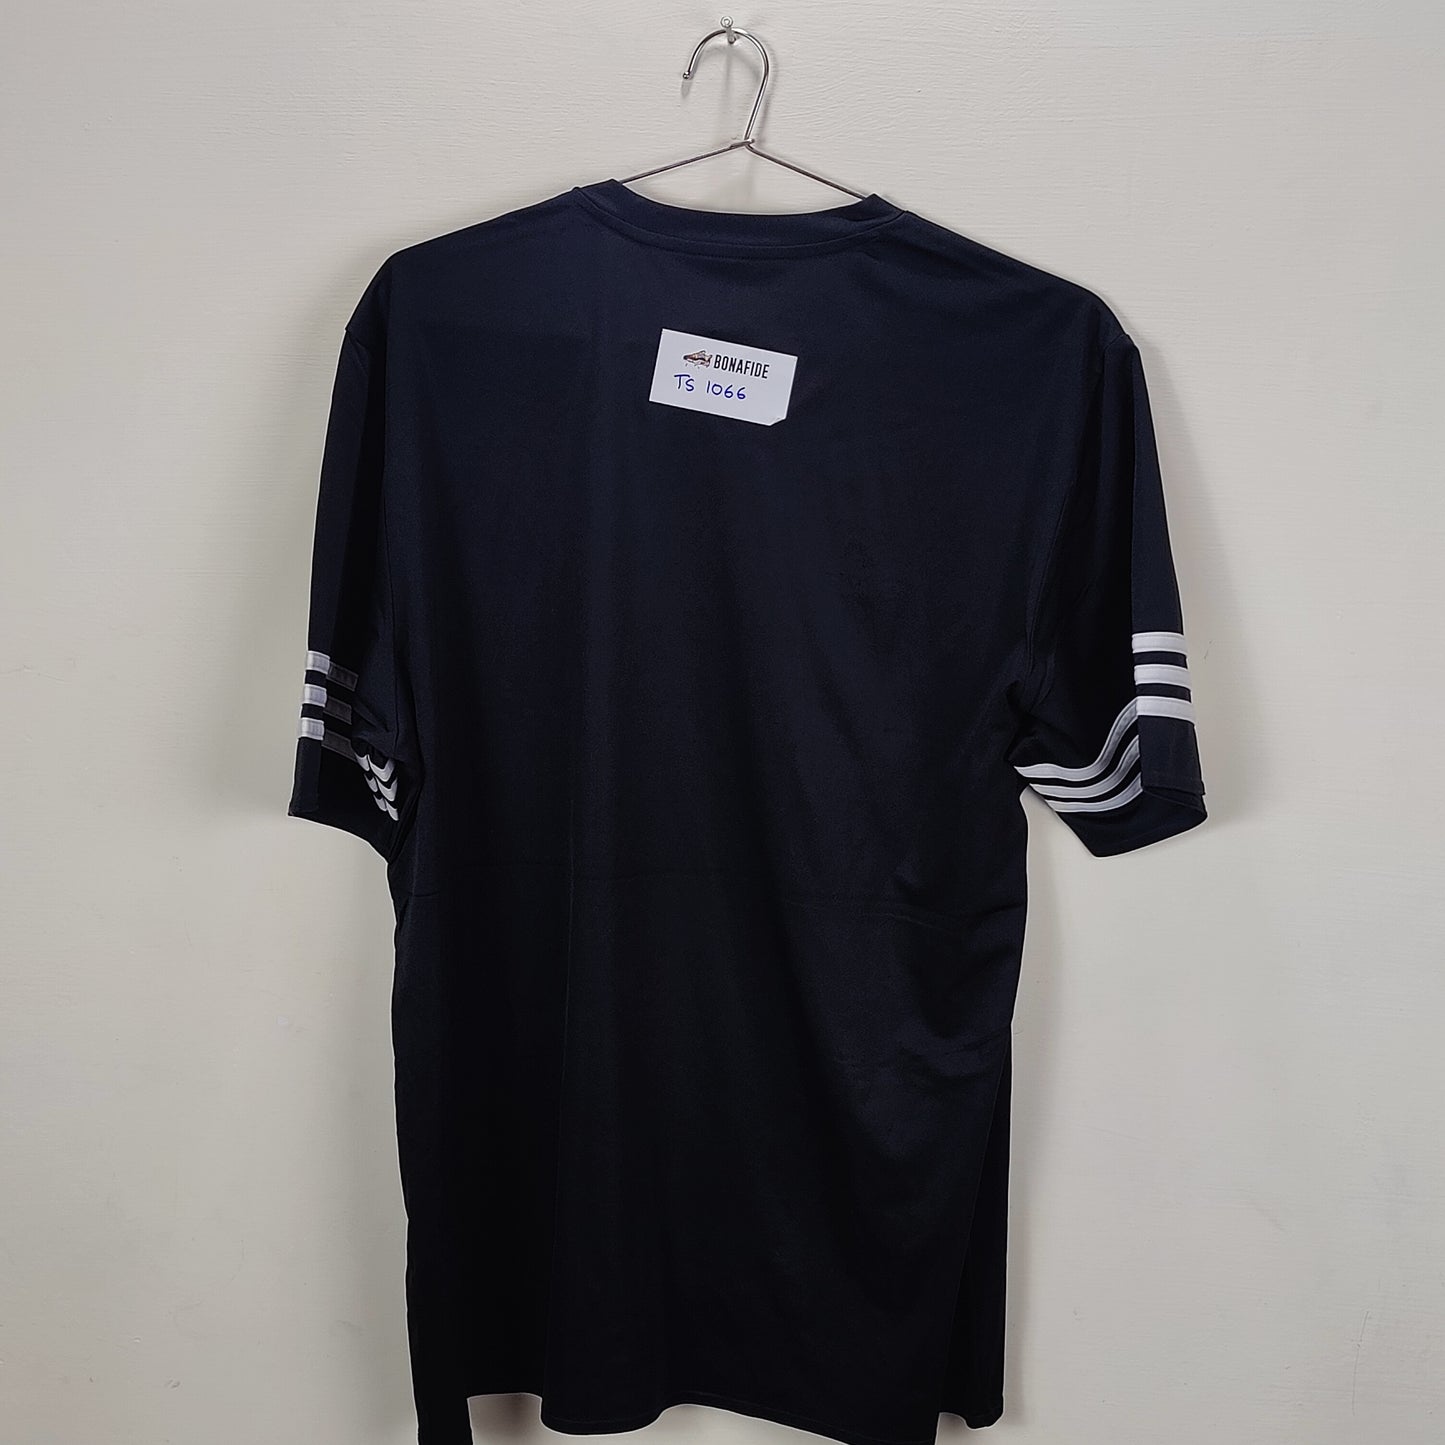 Adidas Climacool Shirt - Black - TS1066